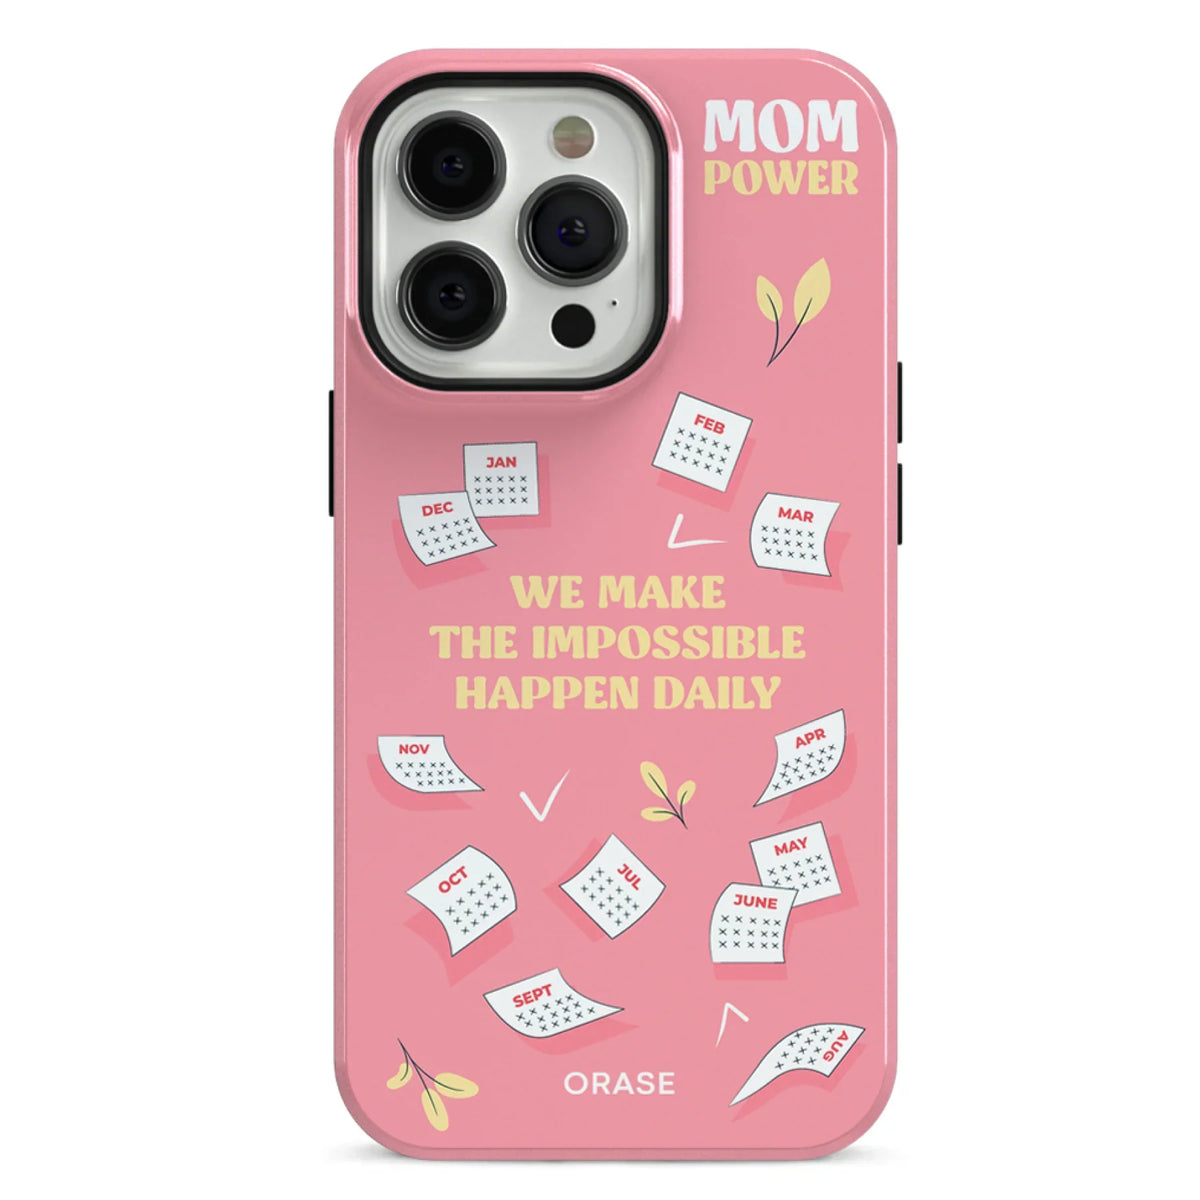 Mom Power iPhone Case - iPhone 12